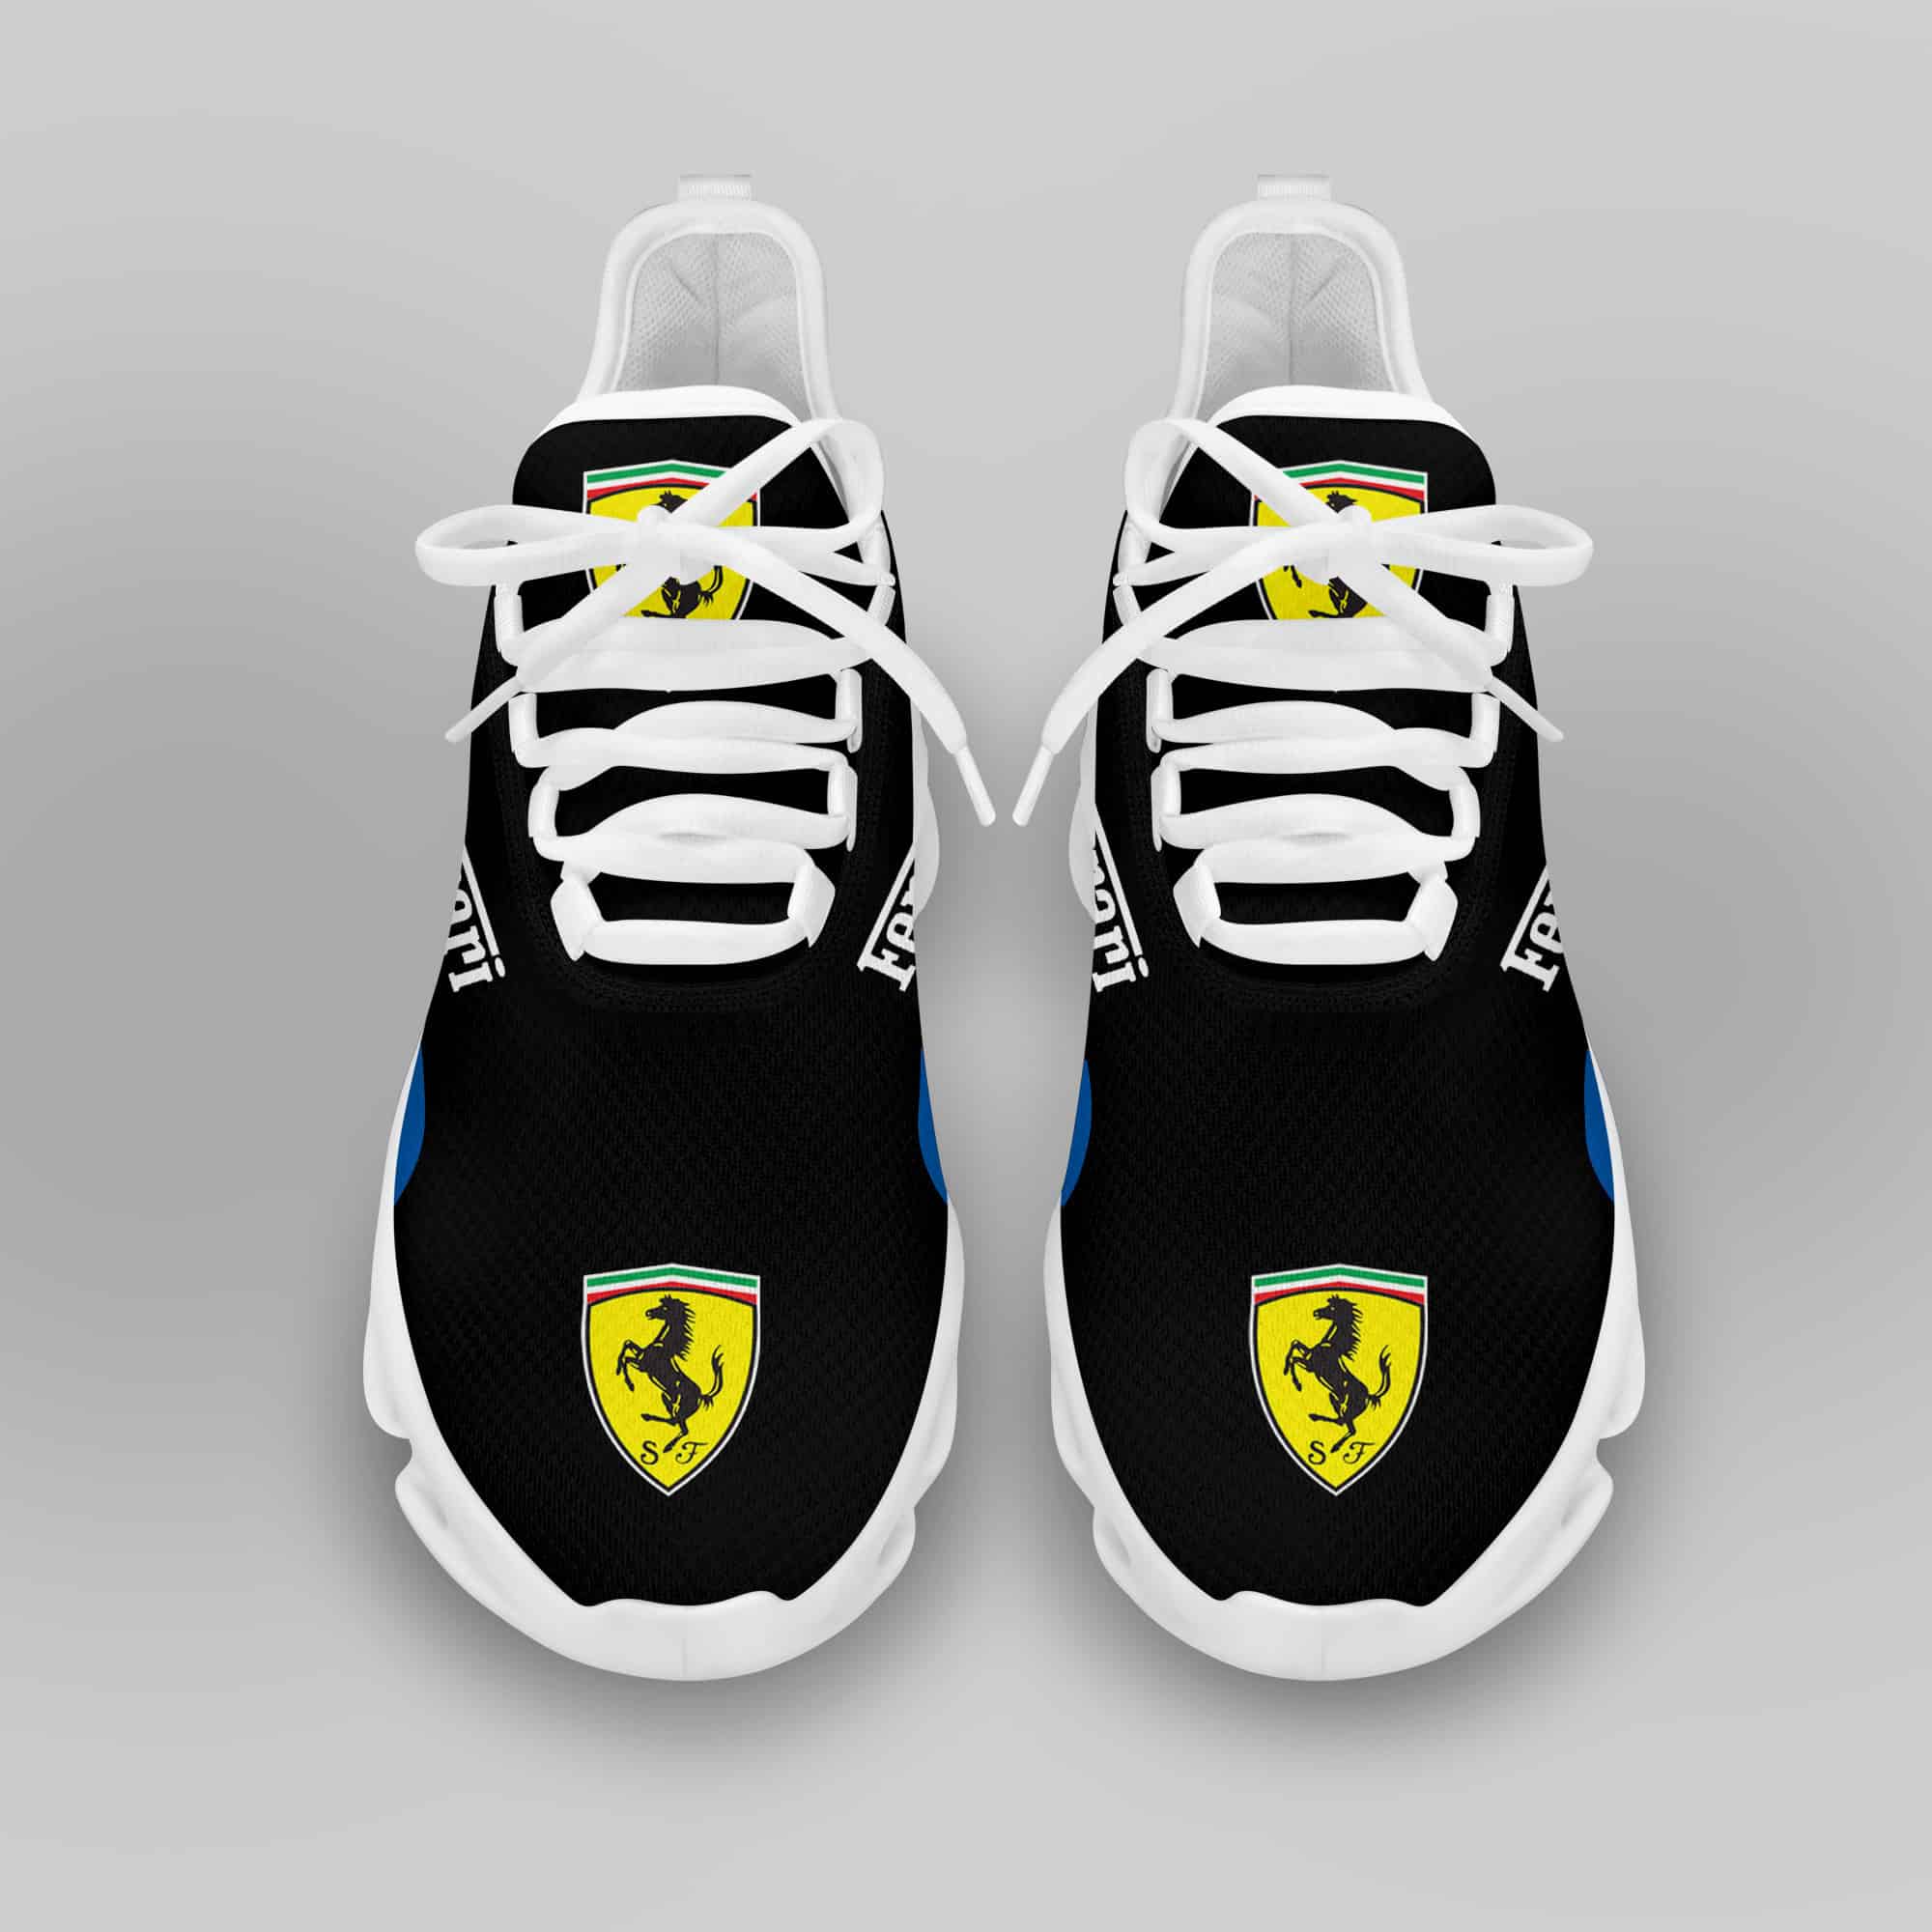 Ferrari Sneaker Running Shoes Max Soul Shoes Sneakers Ver 24 3